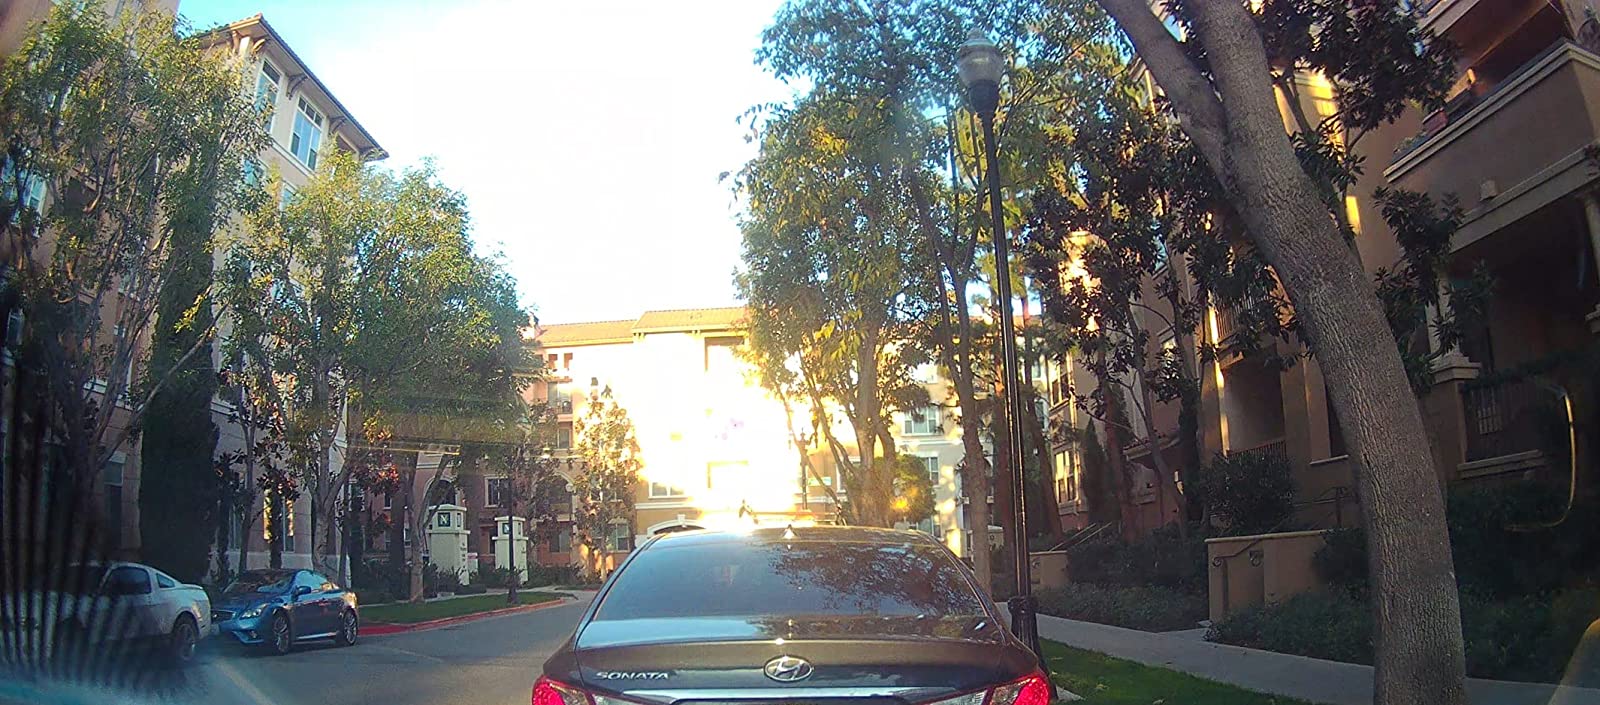 4 Inch 3Lens Hd Car Dvr Rearview Video Dash Cam photo review